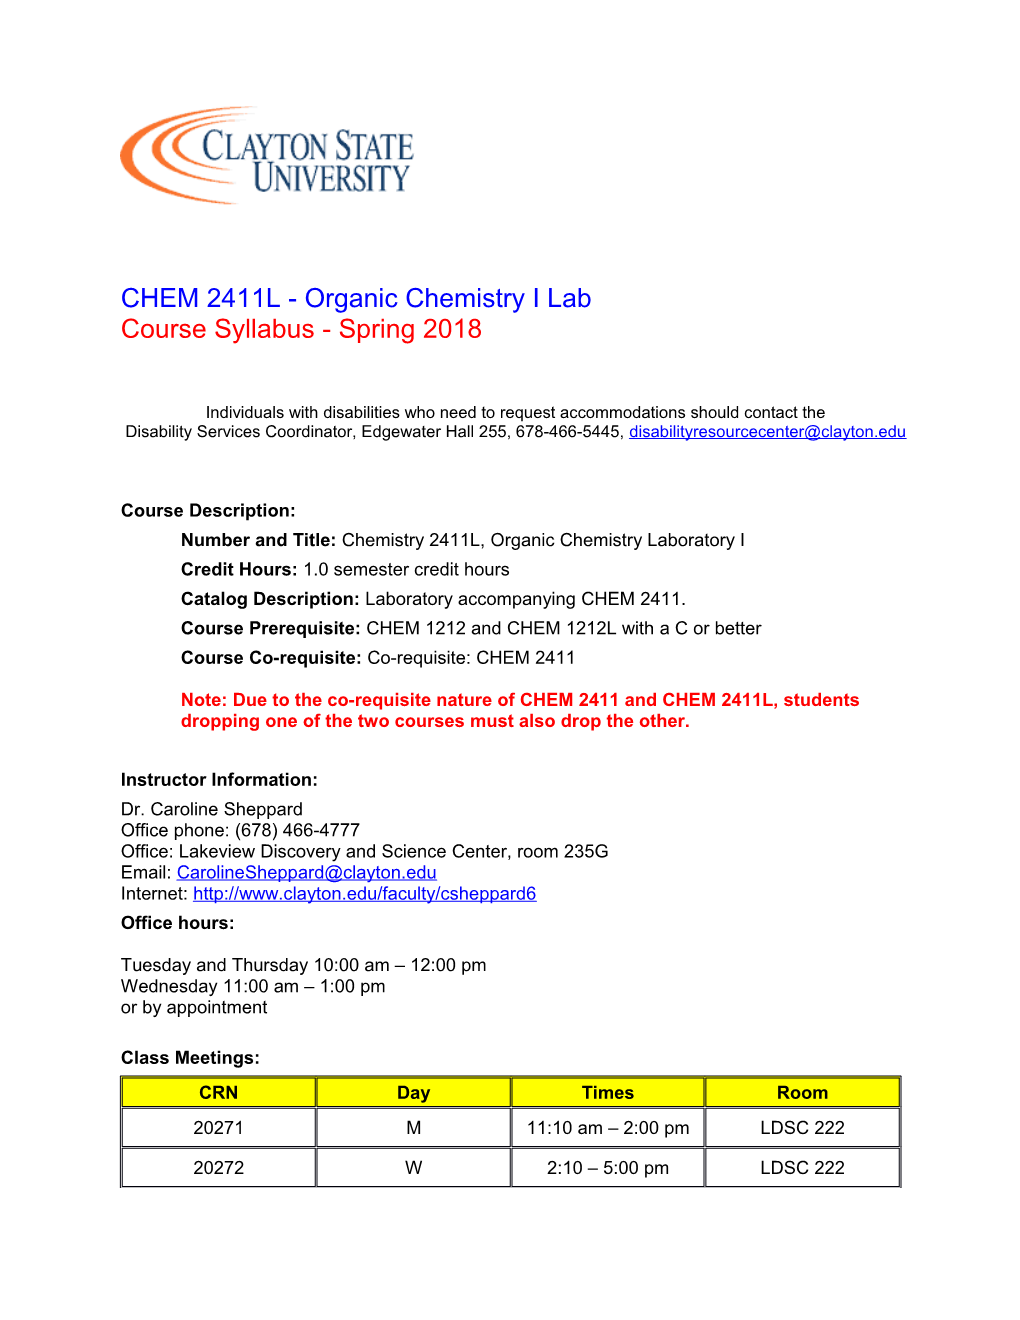 CHEM 2411L - Organic Chemistry I Lab Course Syllabus - Spring 2018